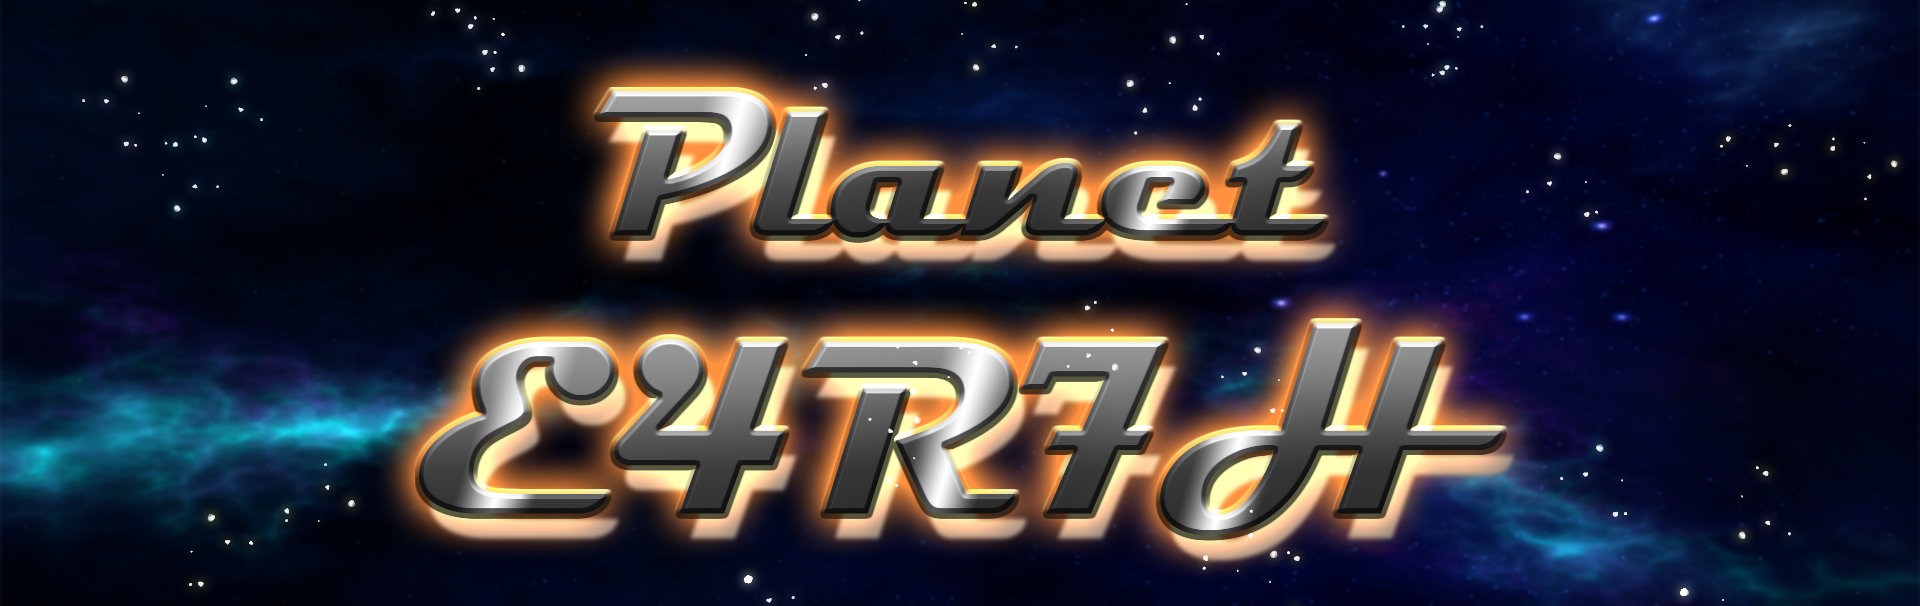 Planet E4R7H